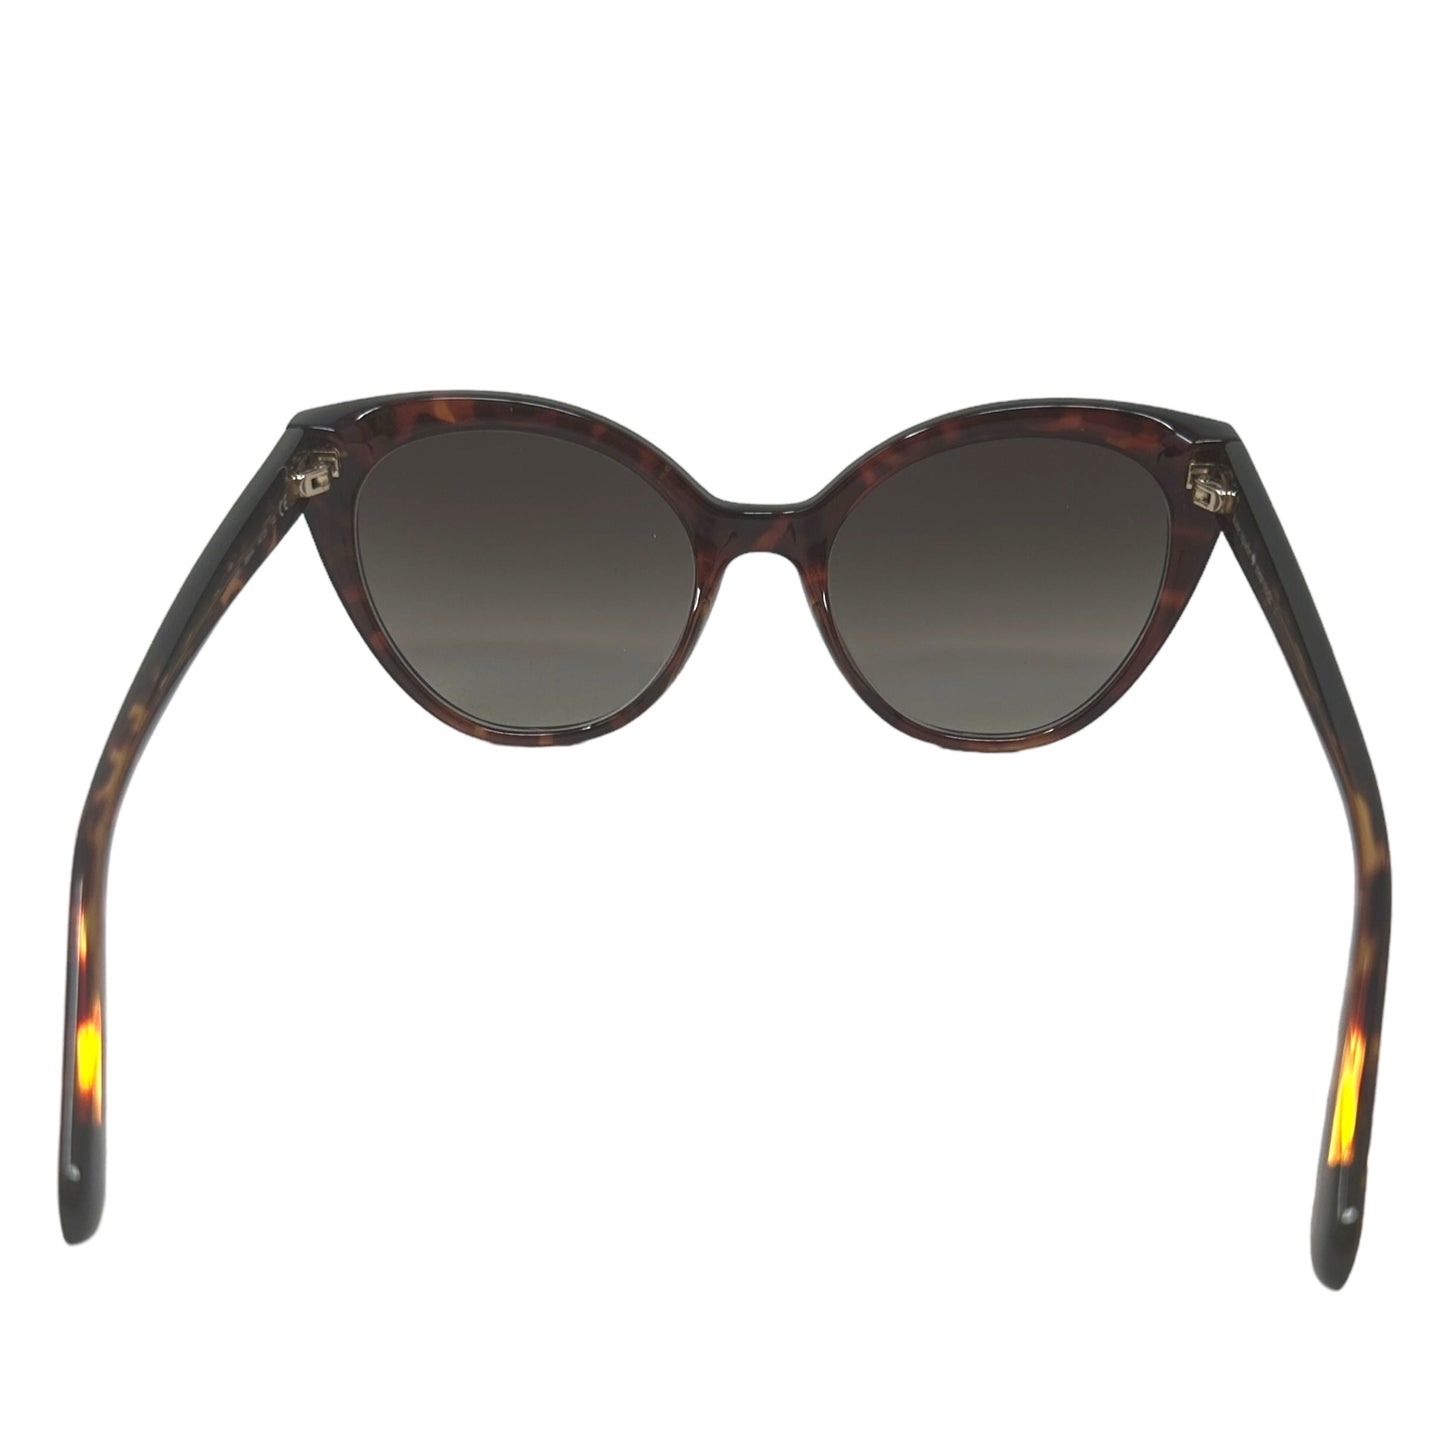 Visalia Cat Eye Sunglasses Designer By Kate Spade